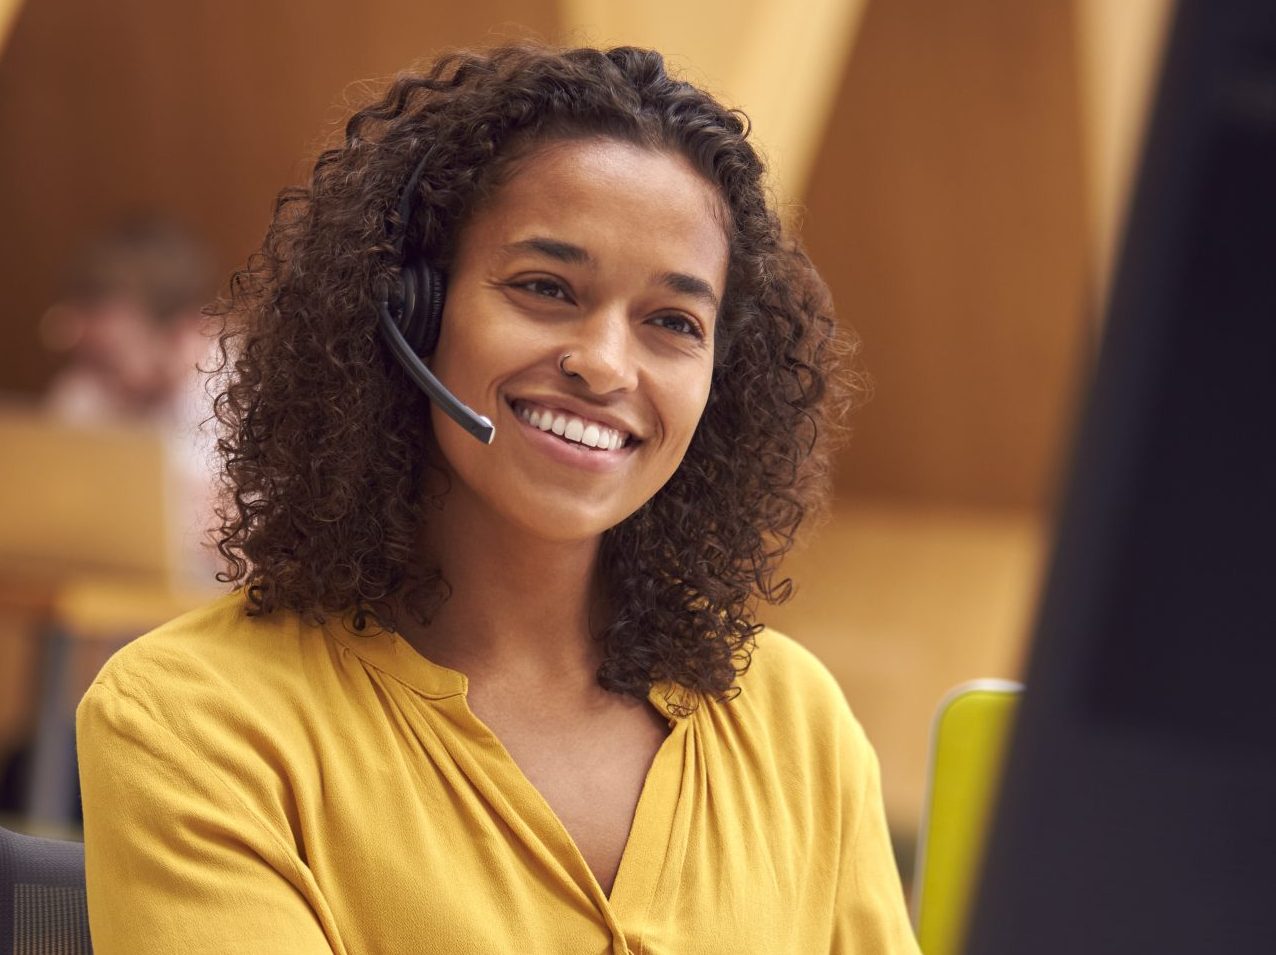 Businesswoman Wearing Phone Headset Talking To Cal 2021 12 09 06 51 17 Utc